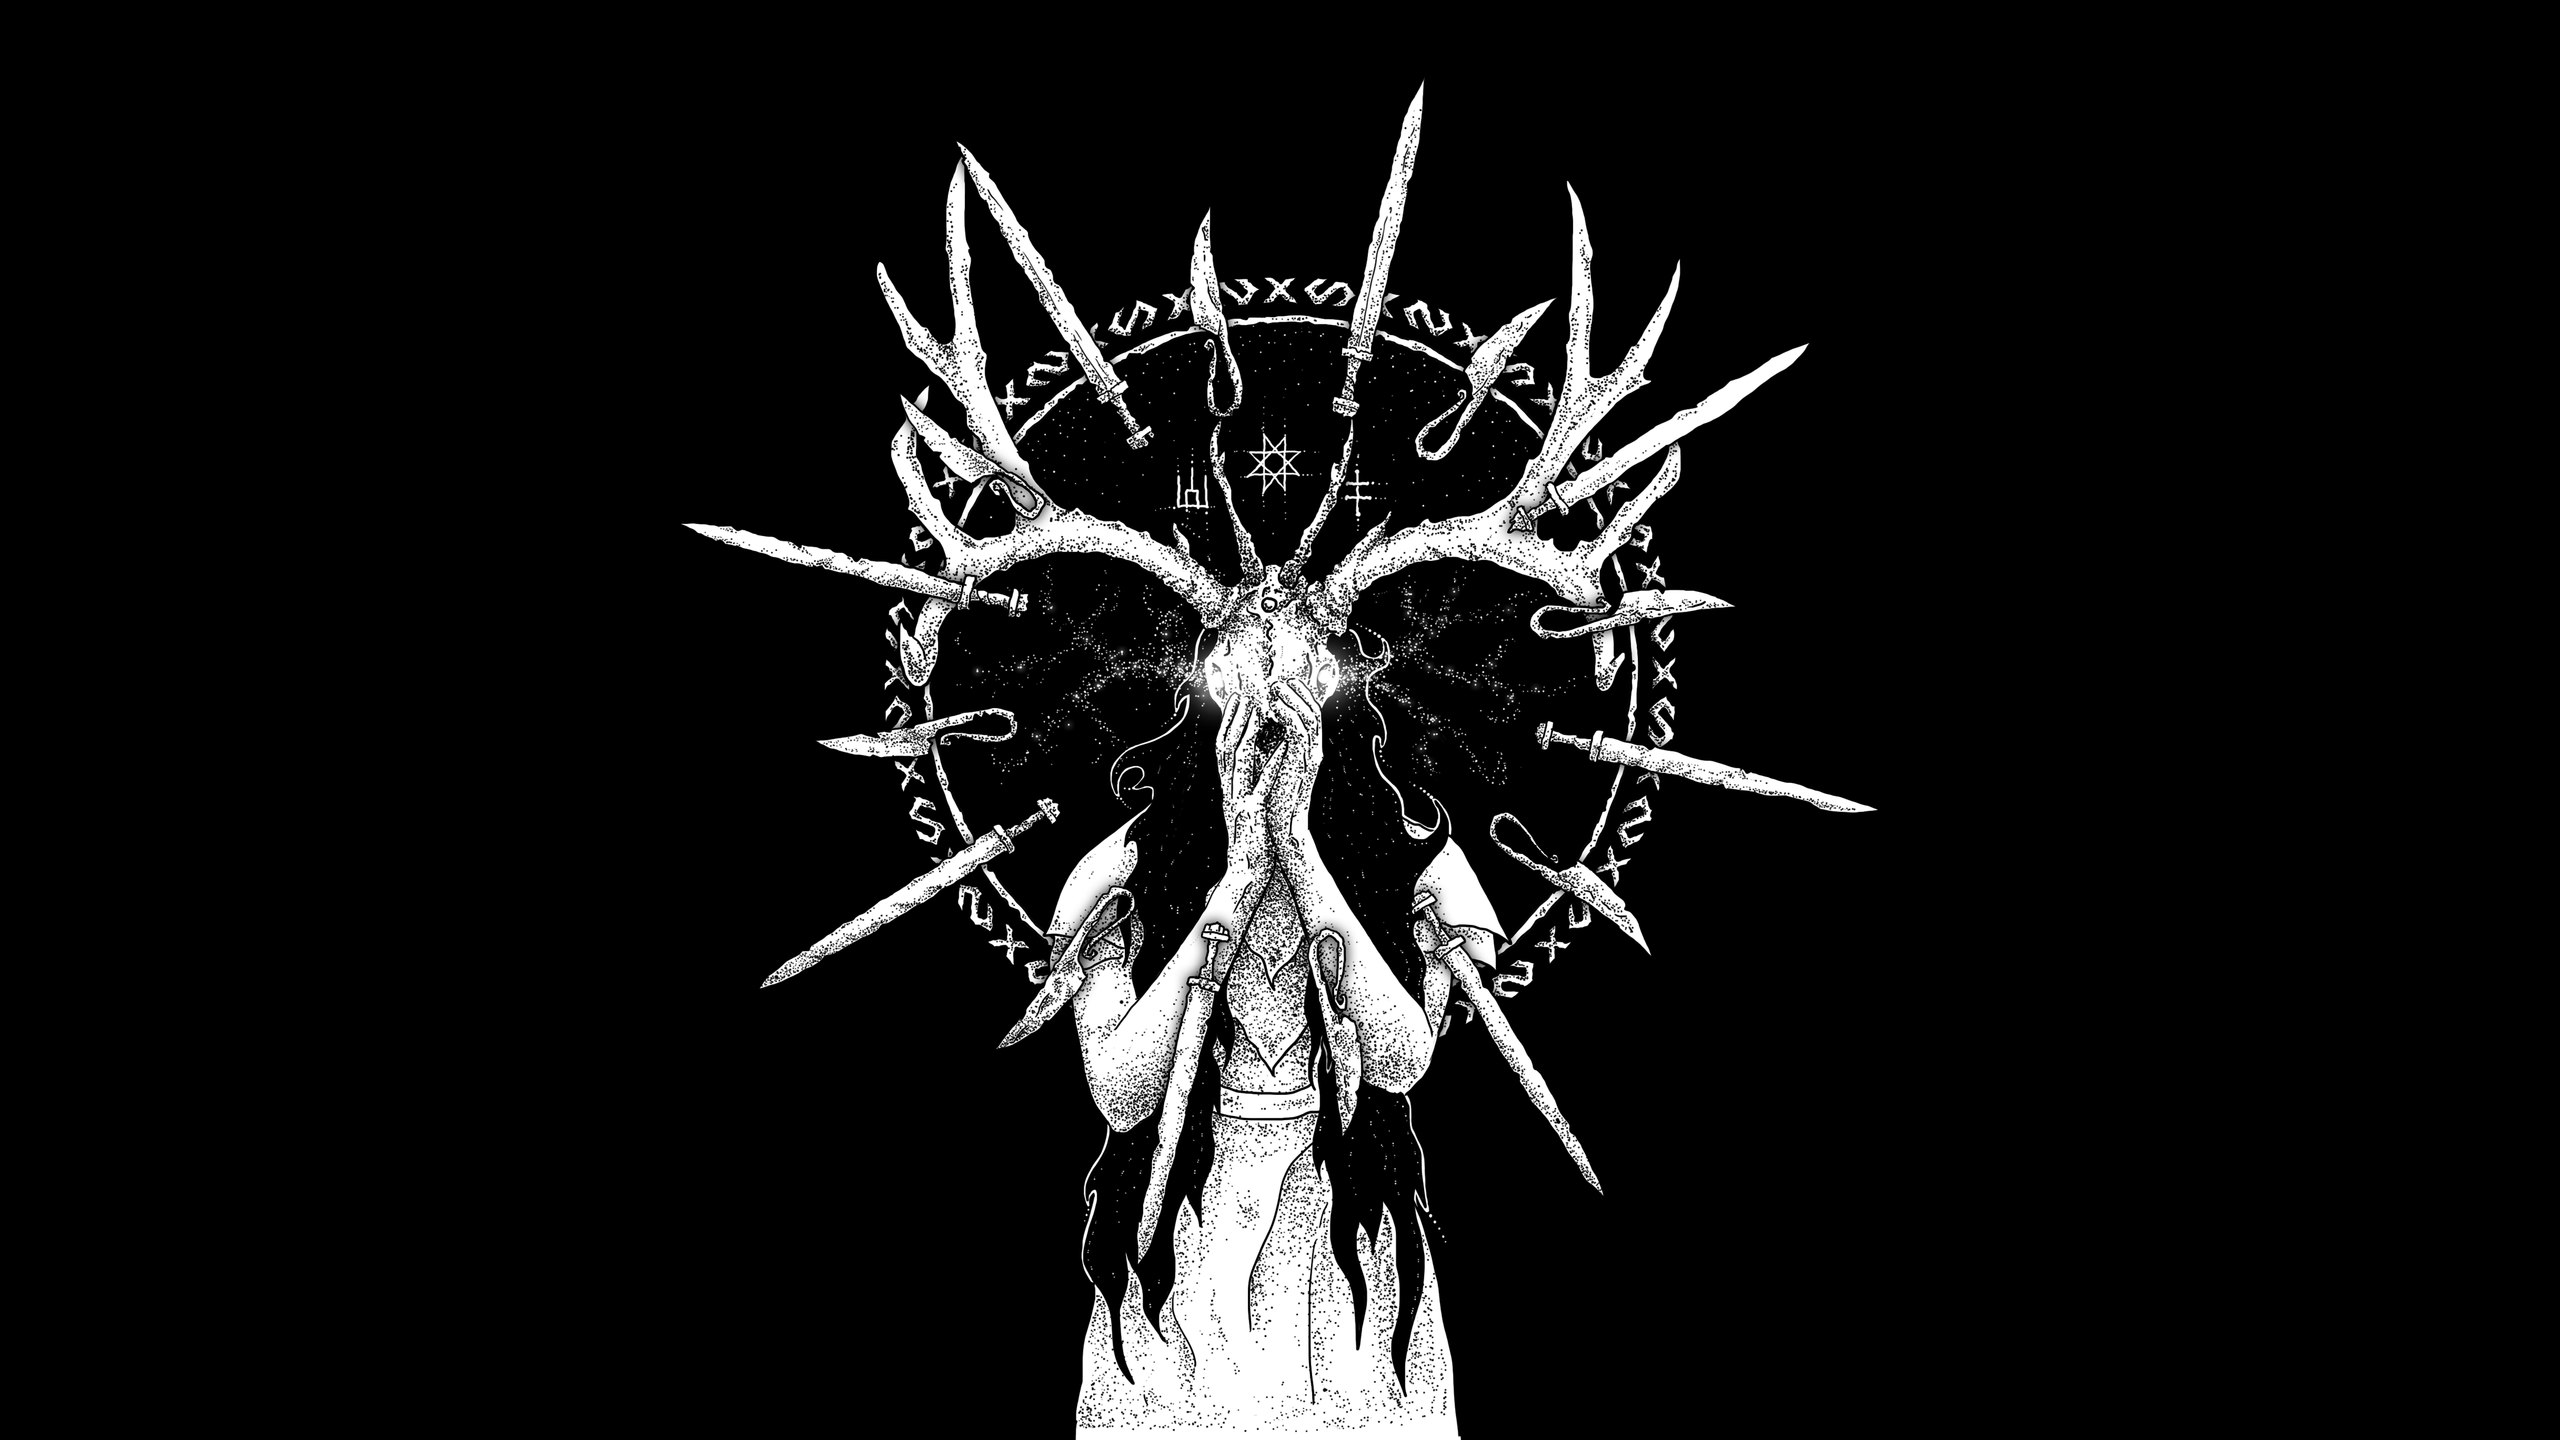 General 2560x1440 creature satanic horns skull bones sword dagger frontal view face palm black background halo simple background digital art